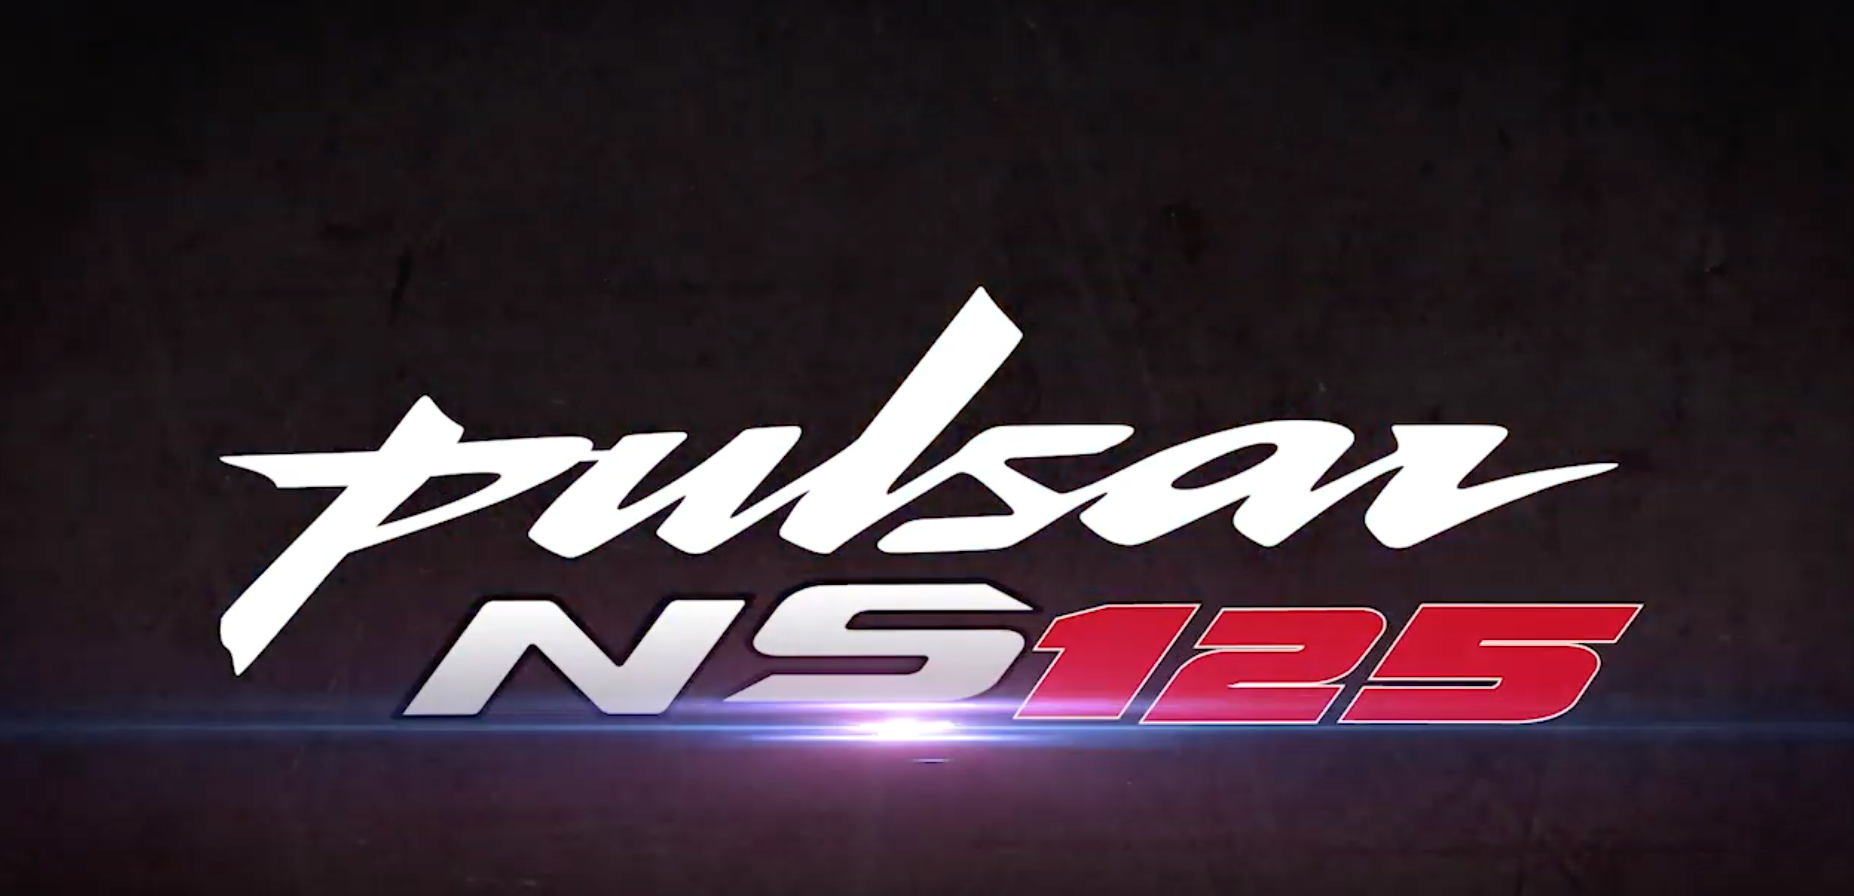 Pulsar 125 Neon Launch: Bajaj Auto launches new Pulsar 125 Neon, ET Auto